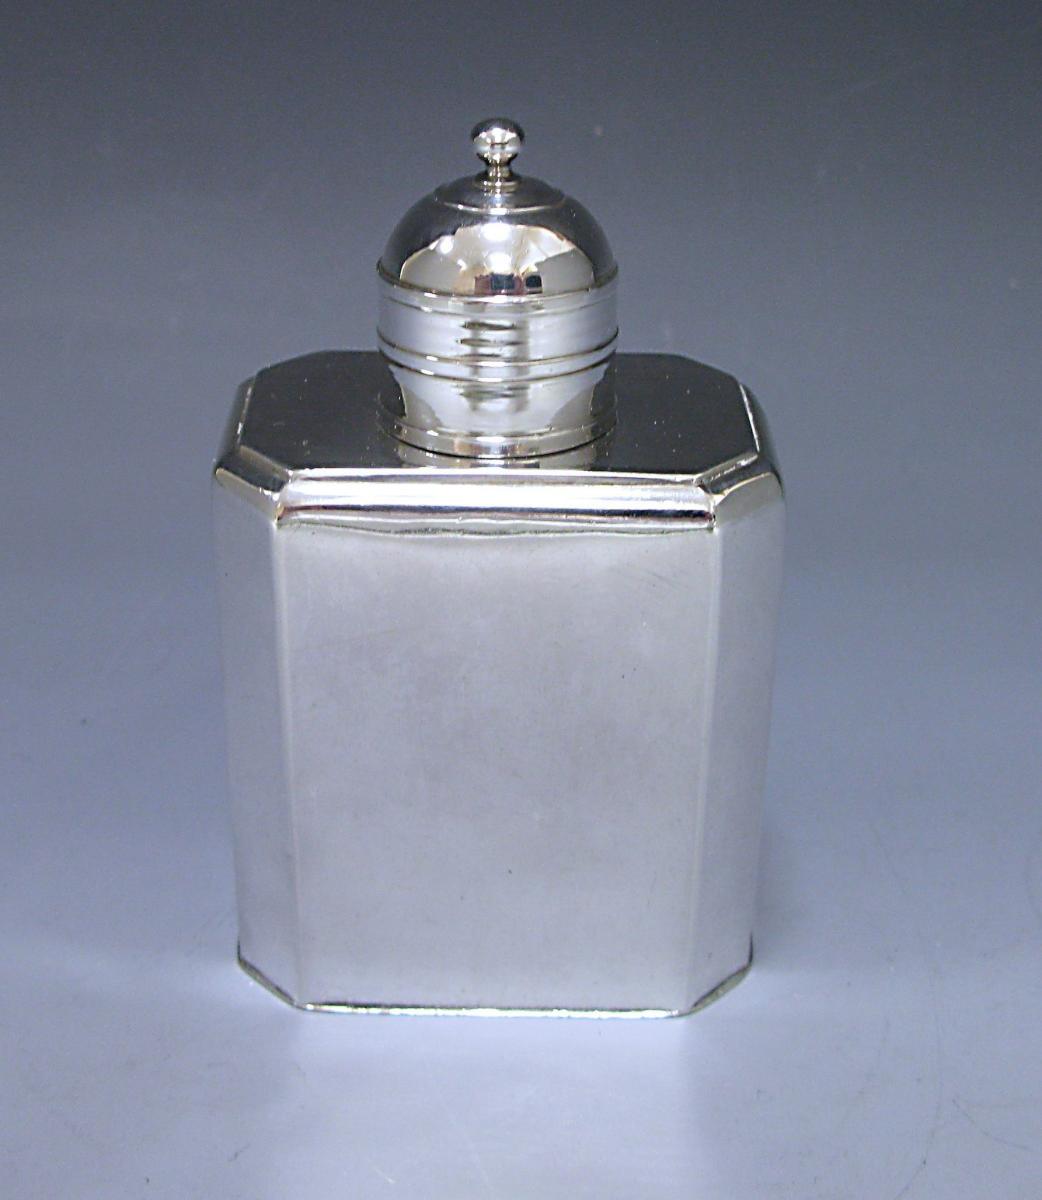 Antique Silver George I Tea Caddy 1715 Thomas Parr